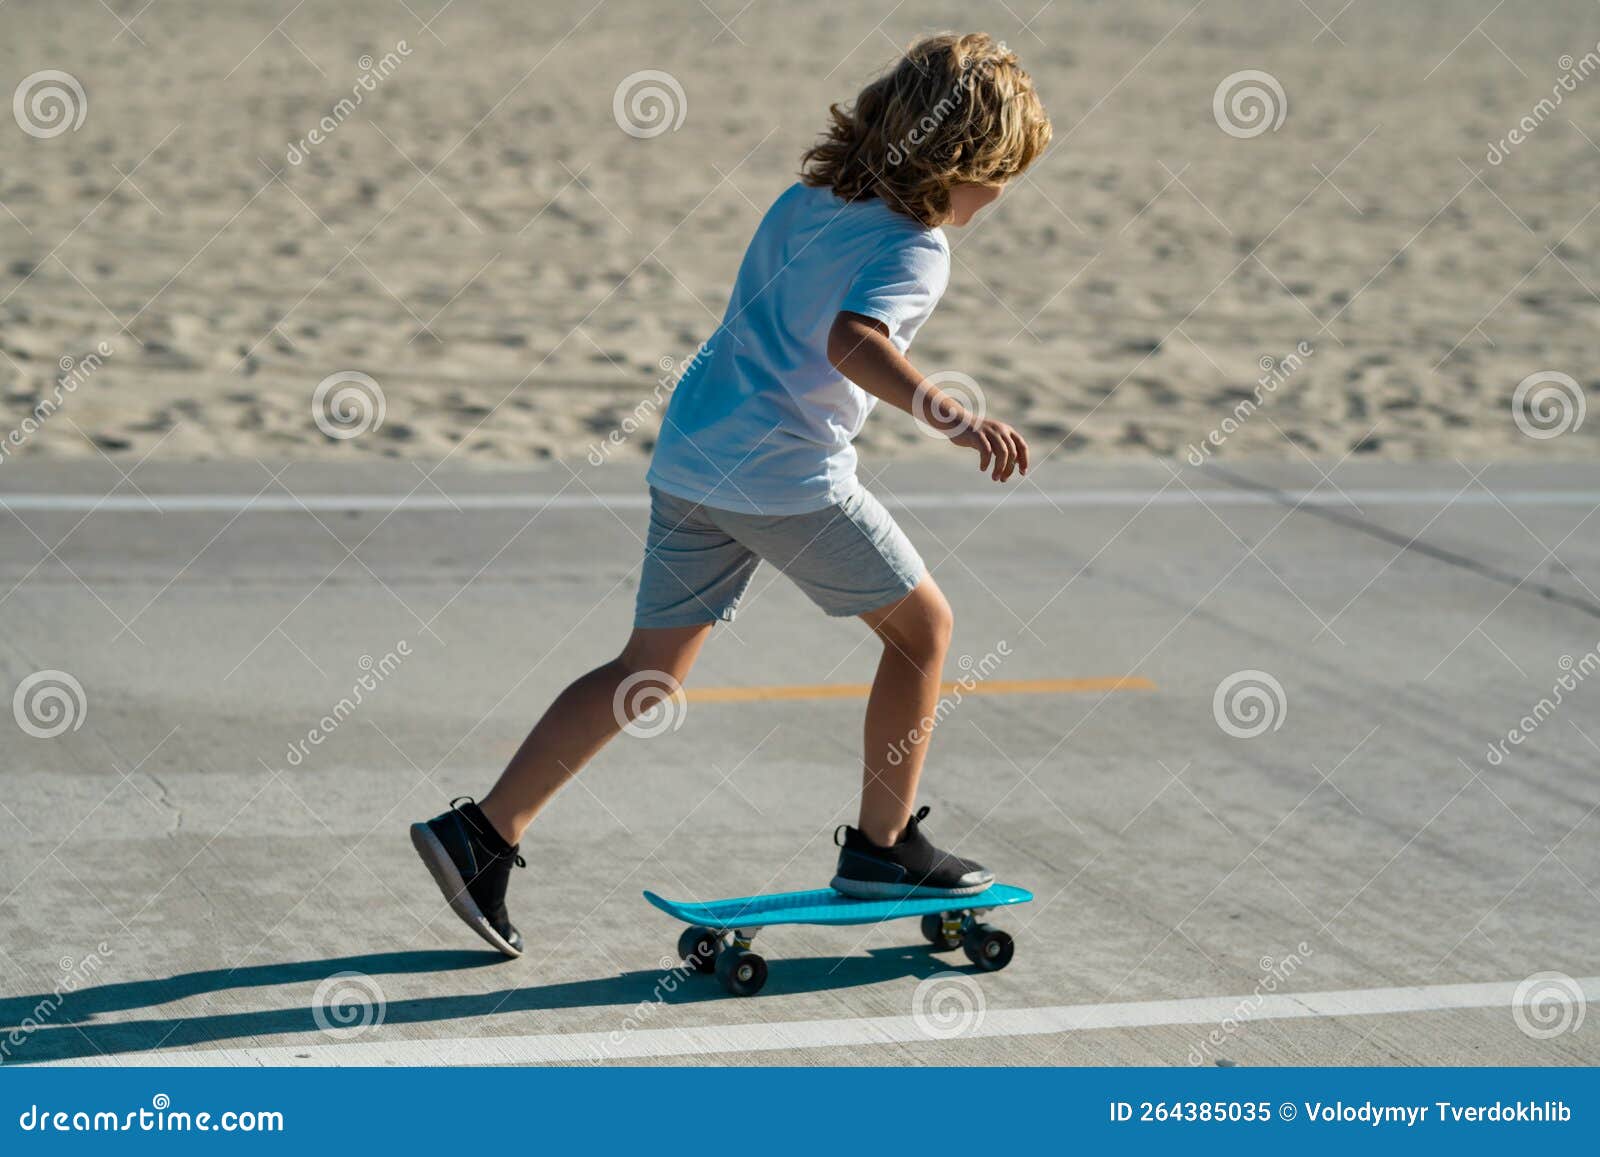 Skateboarder Infantil Monta En Patineta En La Calle. Niño En Una